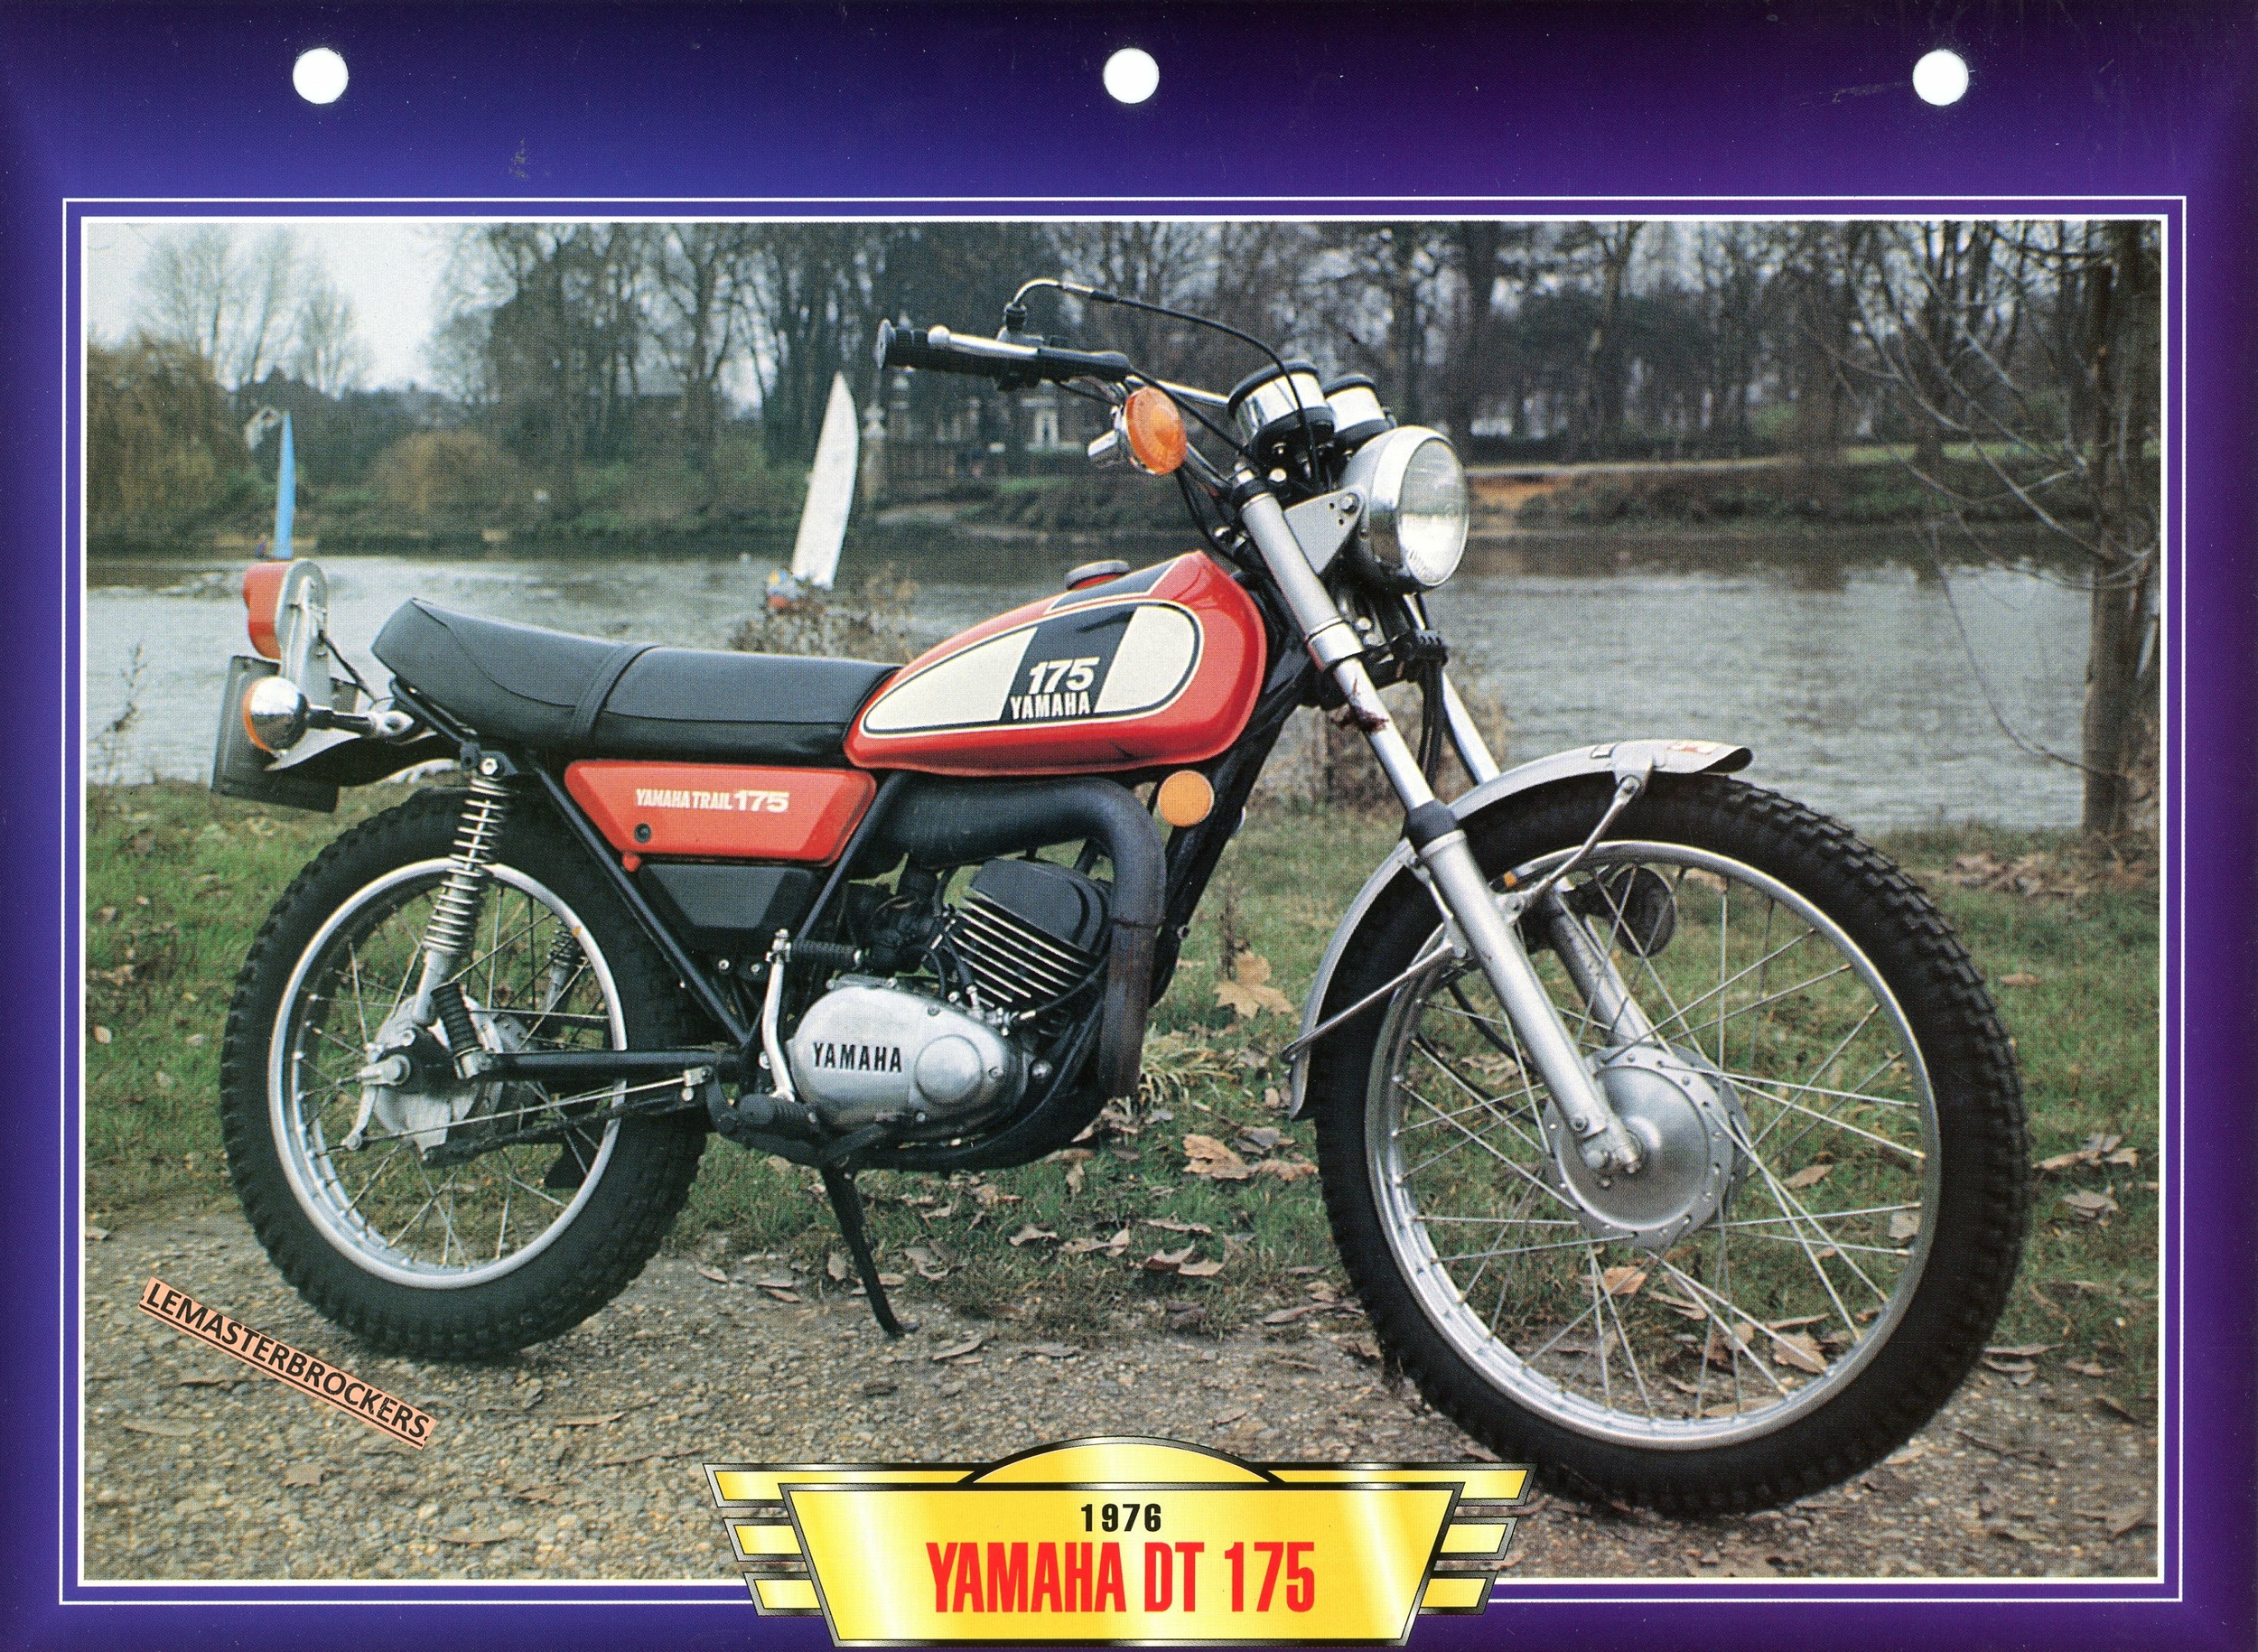 FICHE-MOTO-YAMAHA-DT175-1976-LEMASTERBROCKERS-CARS-MOTORCYCLES-ATLAS